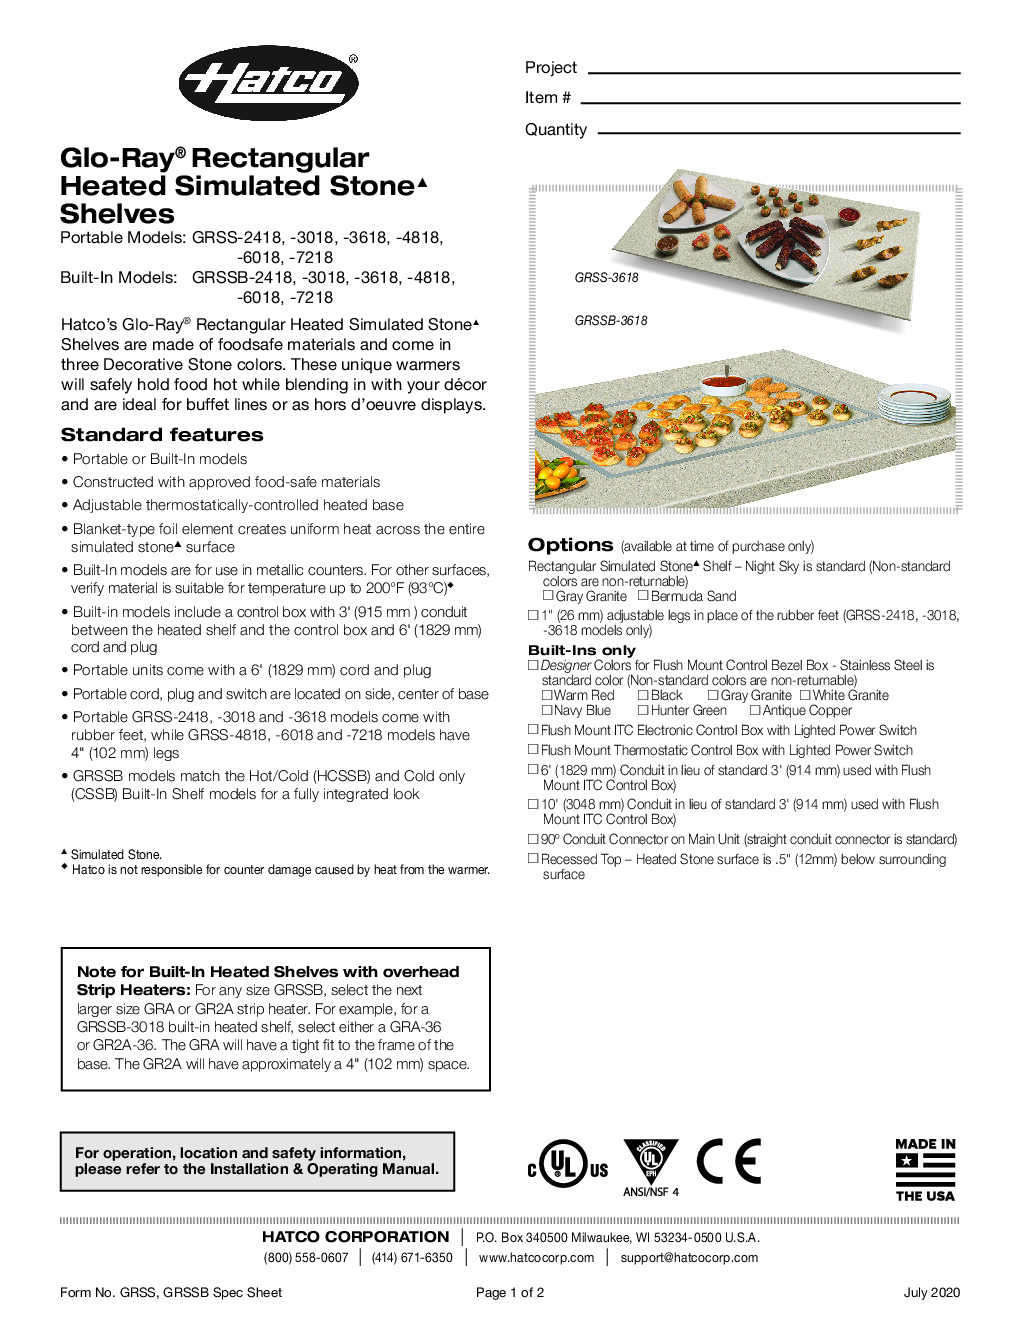 Hatco GRSS-4818 Heated Shelf Food Warmer